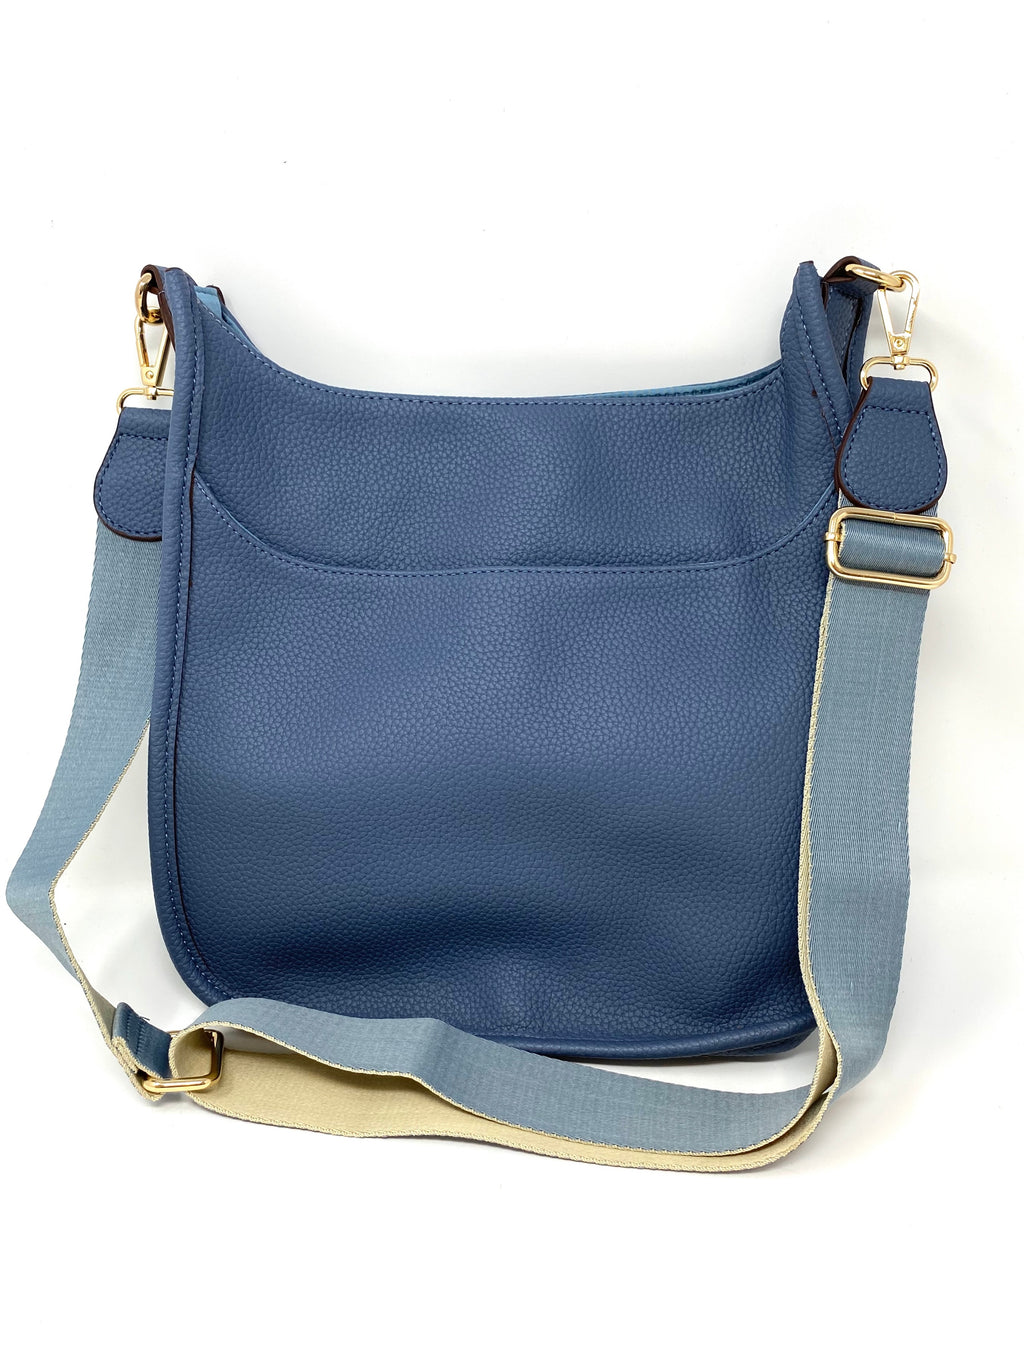 Saddle Bag in Vegan Leather in Denim Blue